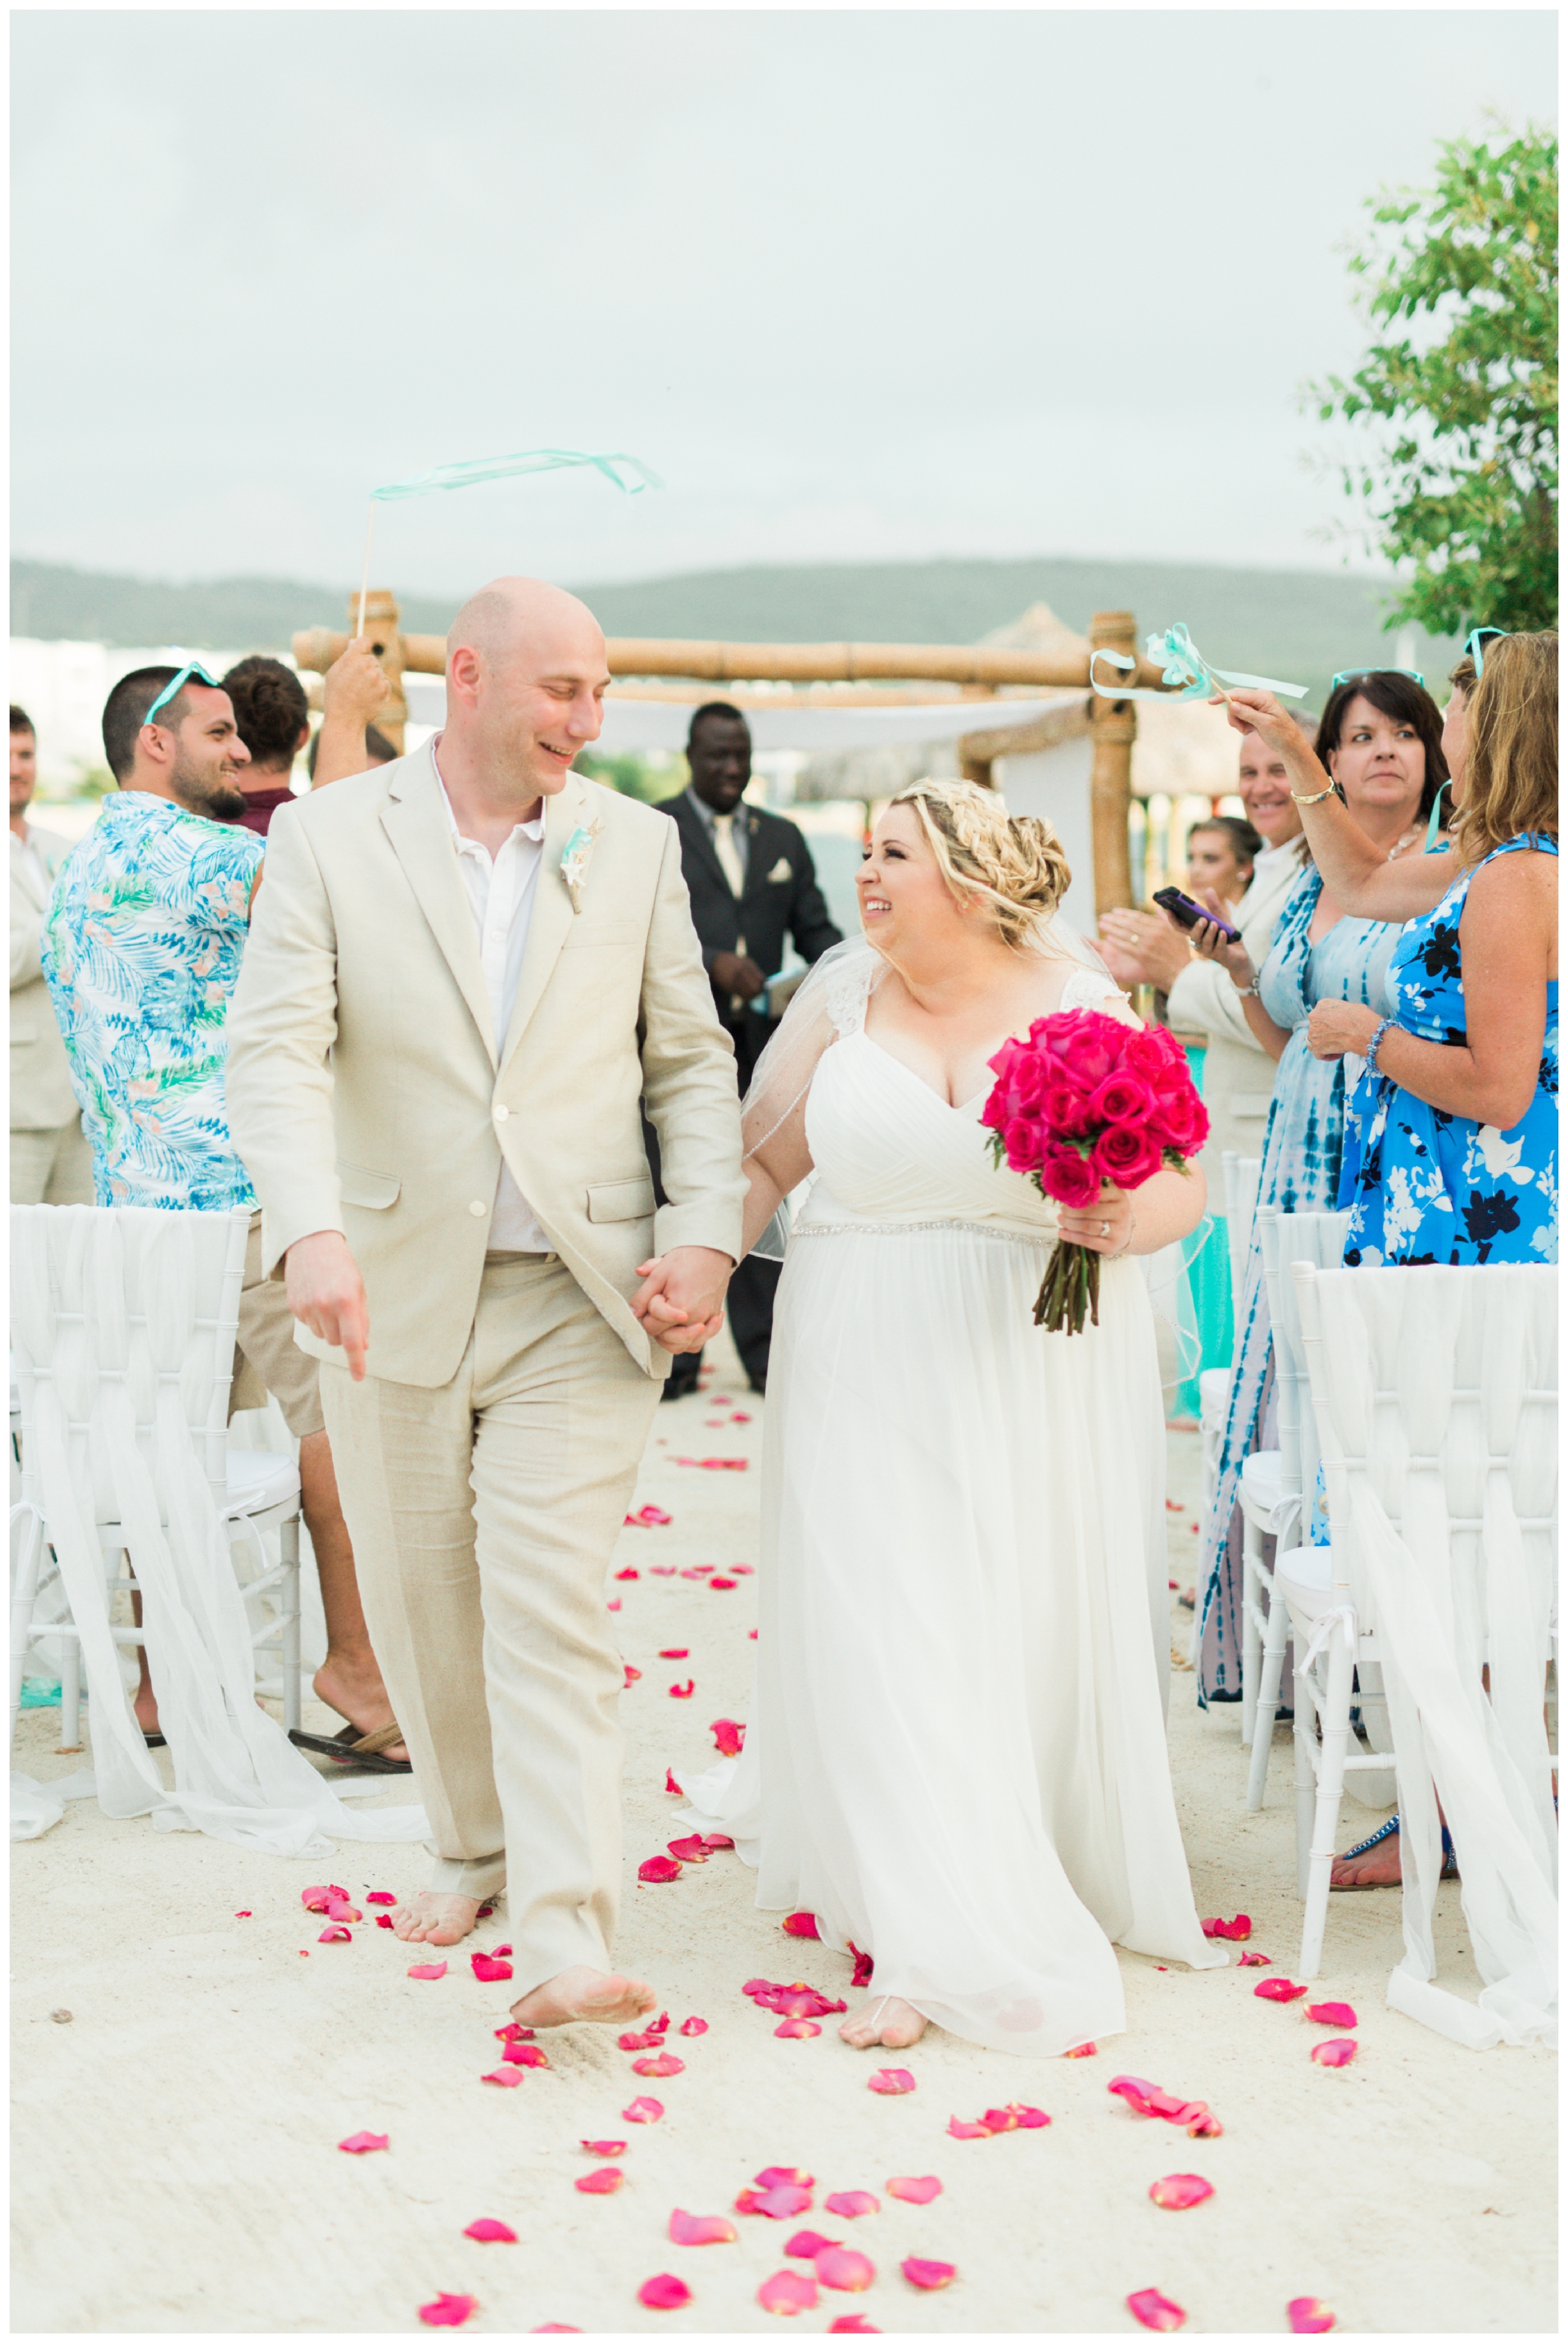 A Tropical Beach Wedding at Sandals Royal Caribbean in Montego Bay, Jamaica